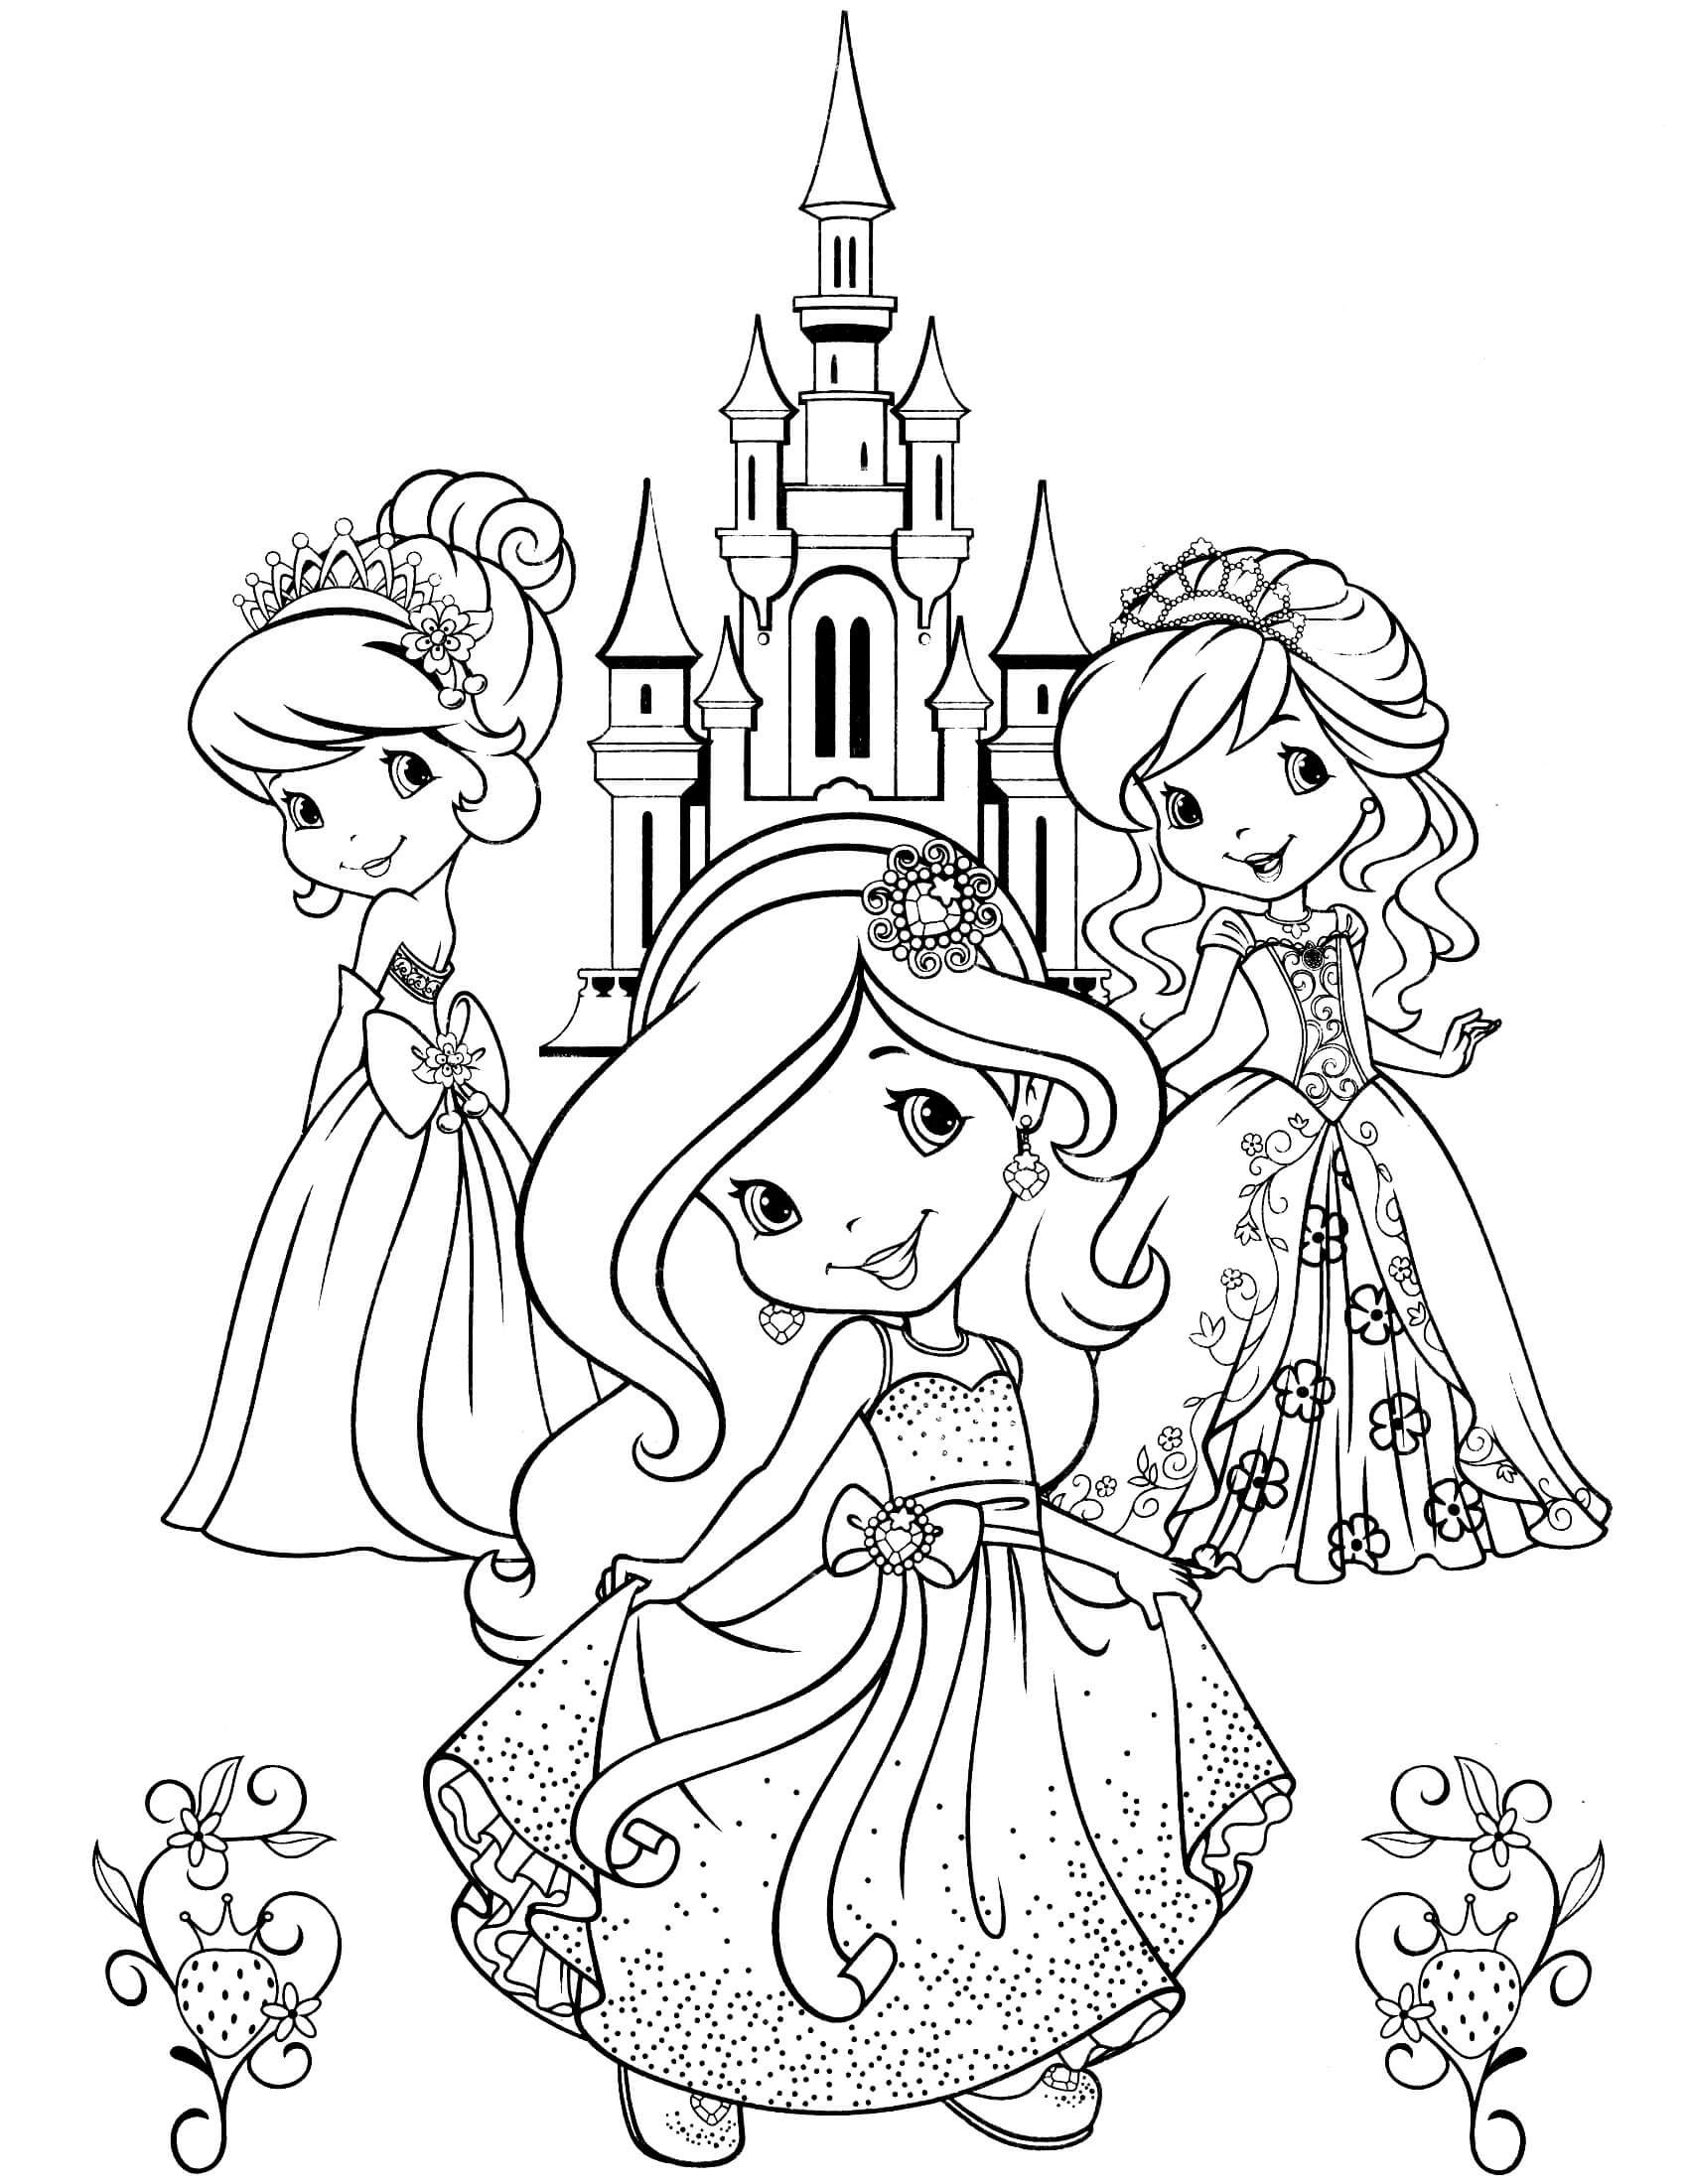 Girls princesses #2